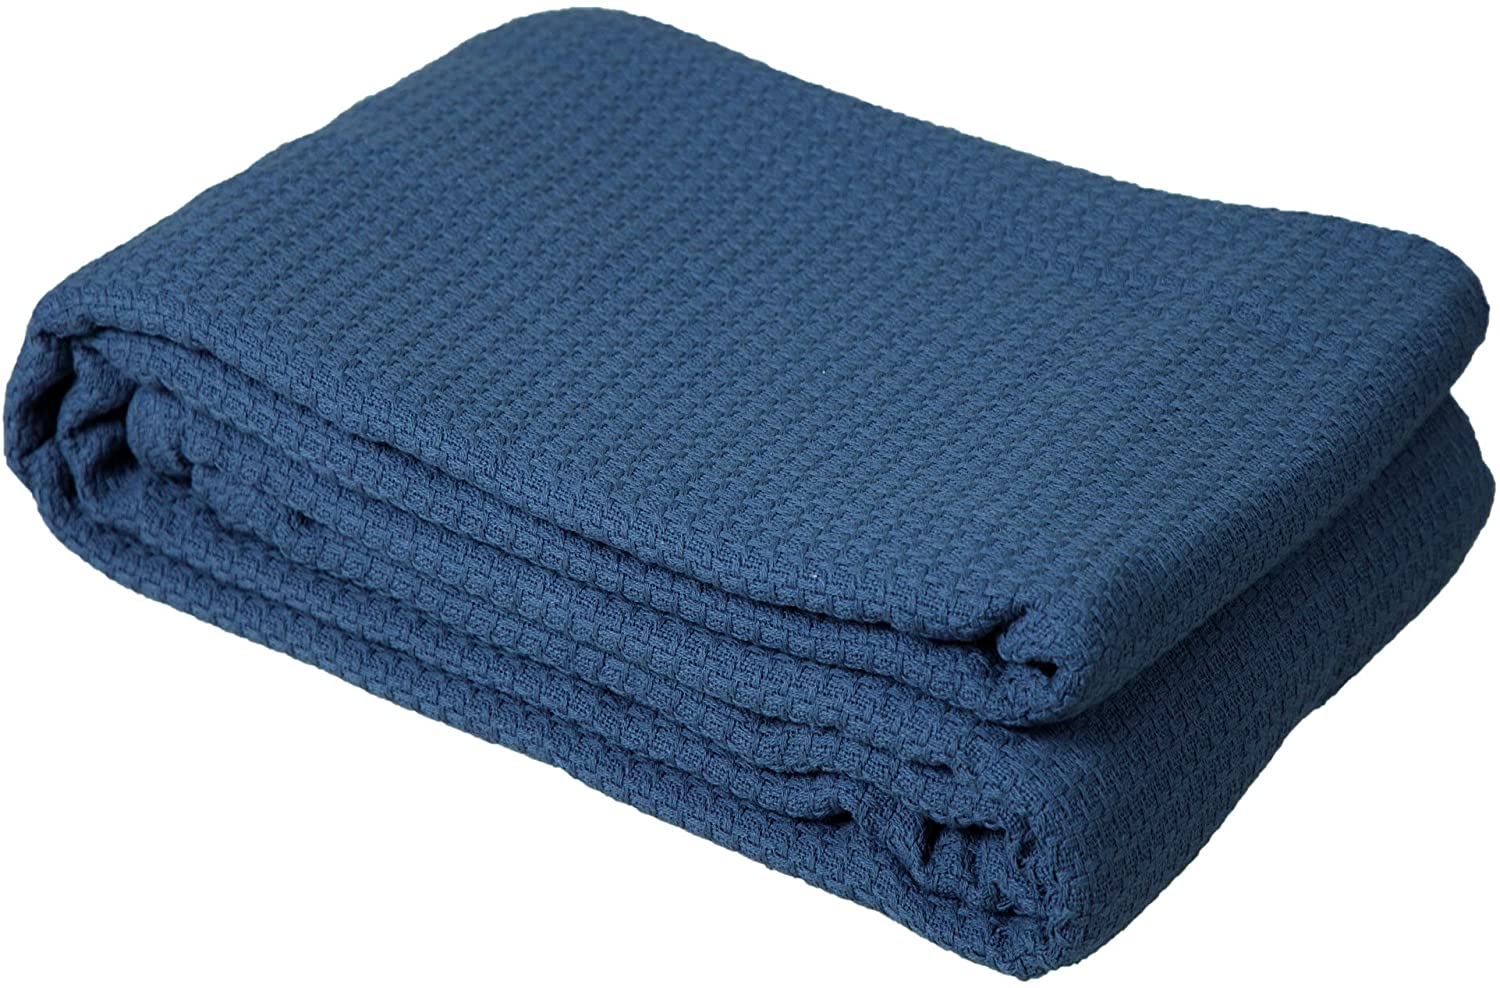 blankets for california king size mattress